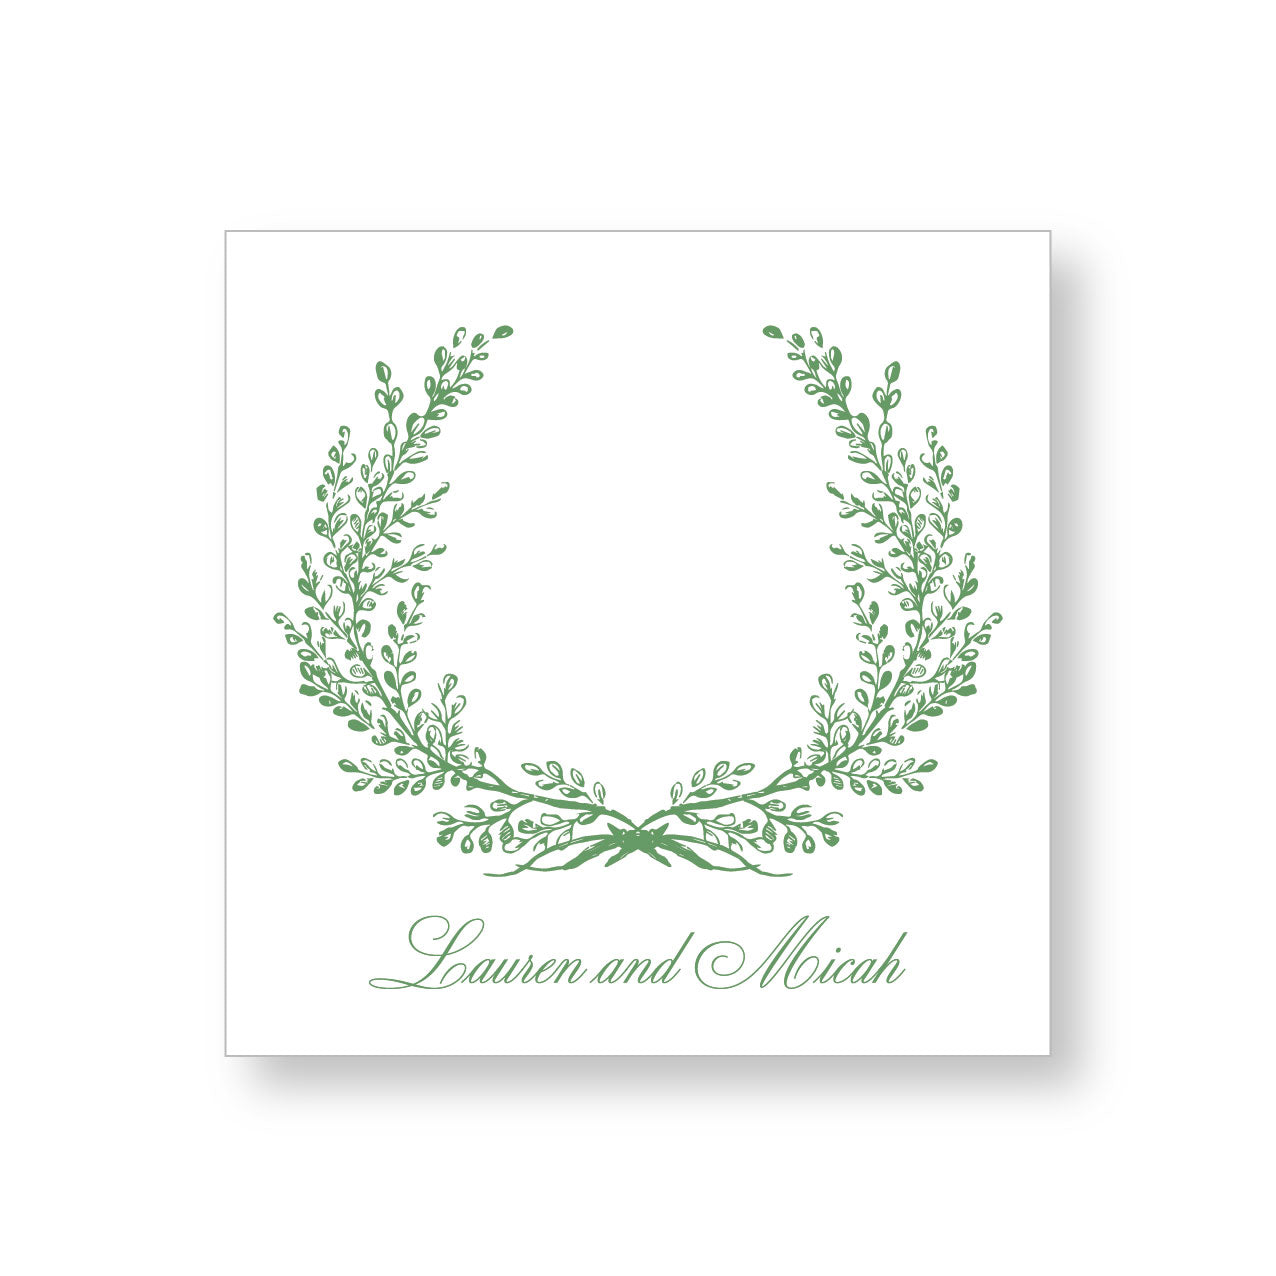 Gift Tag or Sticker   |     Laurel Wreath